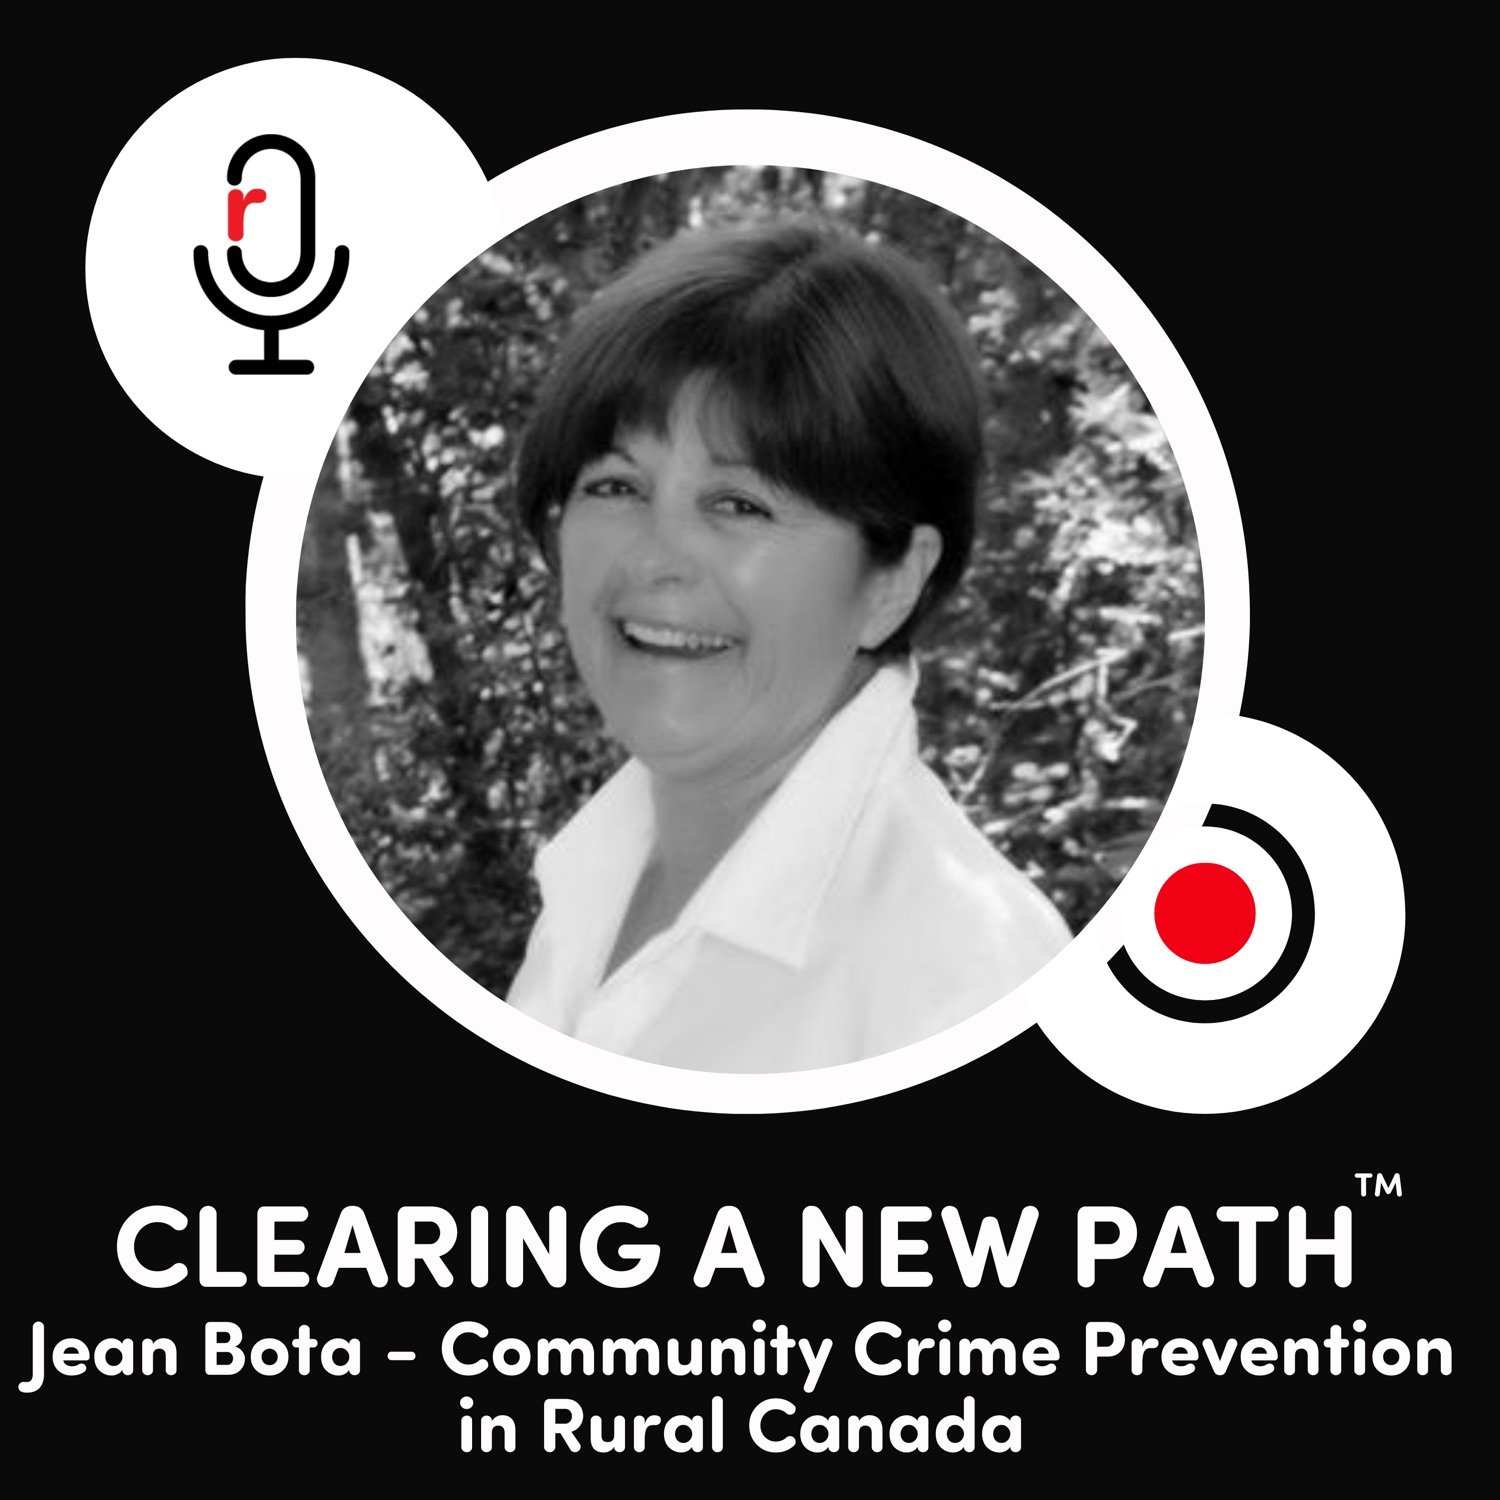 Jean Bota - Community Crime Prevention in Rural Canada